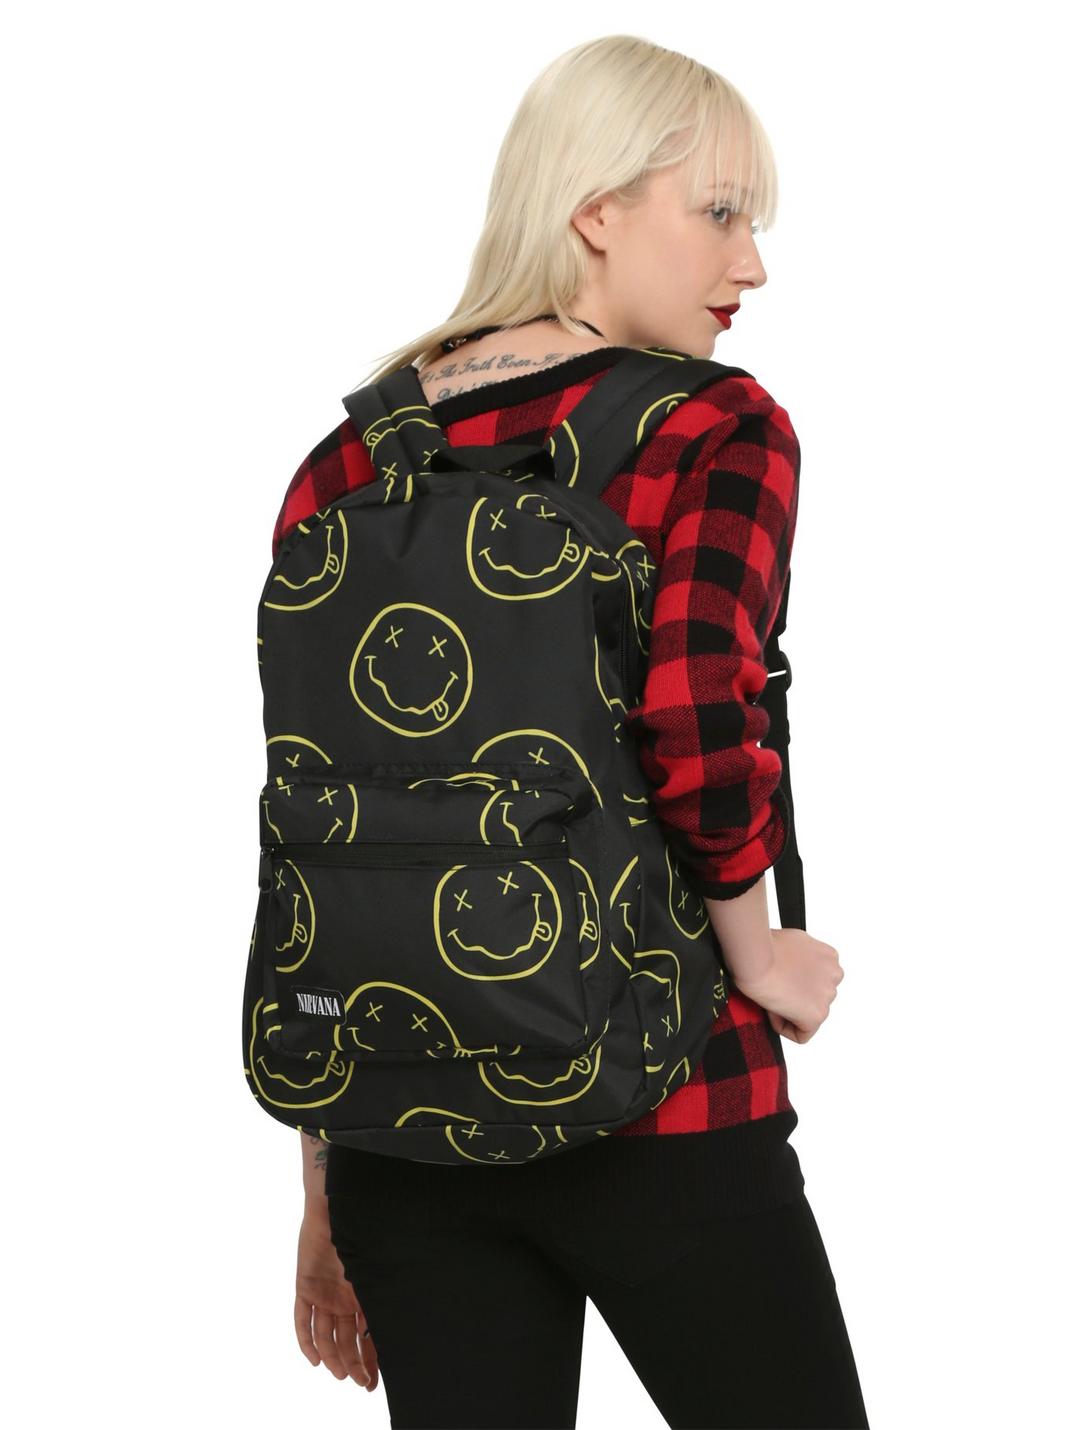 Nirvana Smiley Backpack, , hi-res